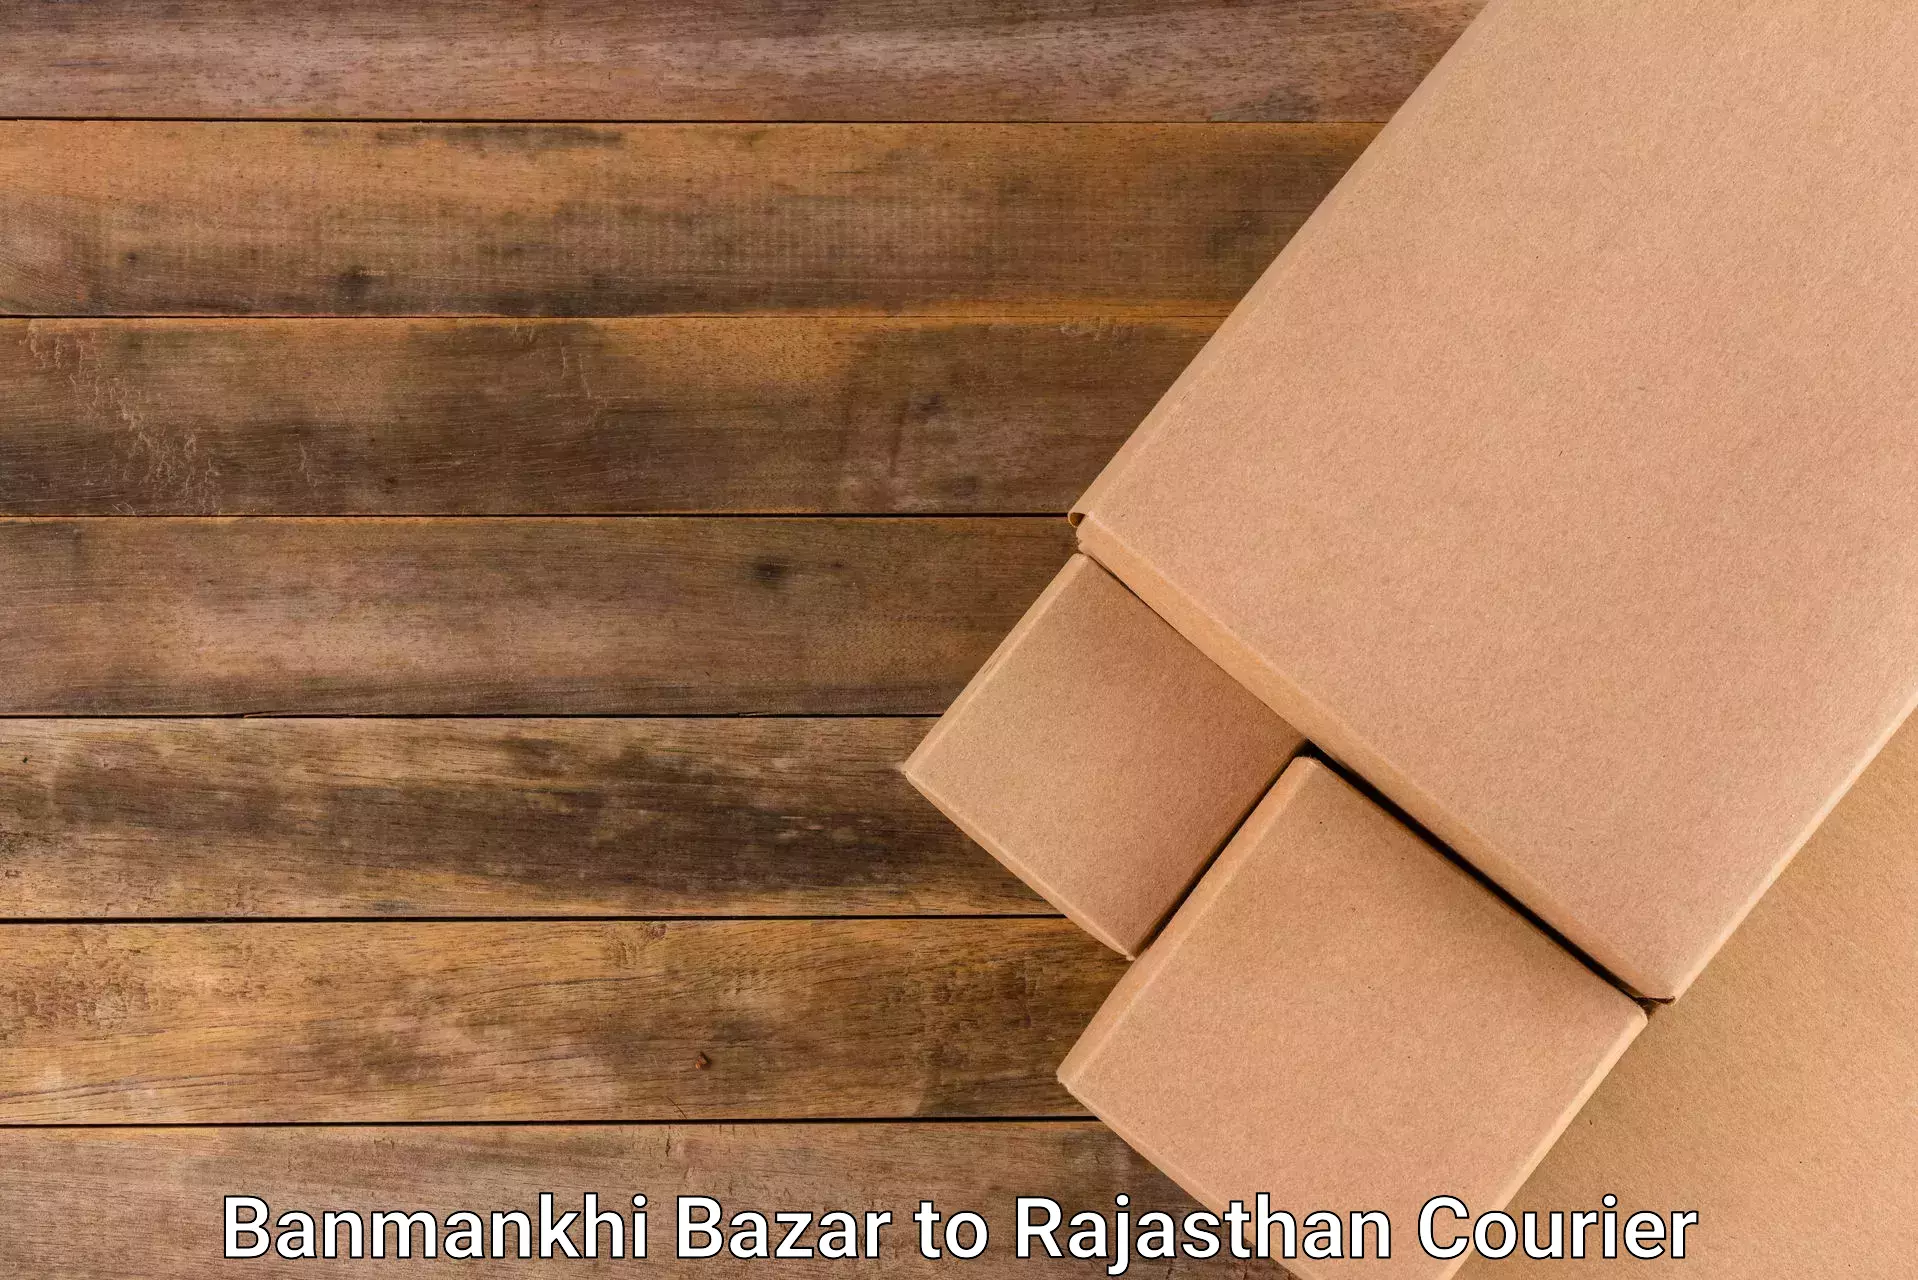 Efficient courier operations Banmankhi Bazar to Raipur Pali